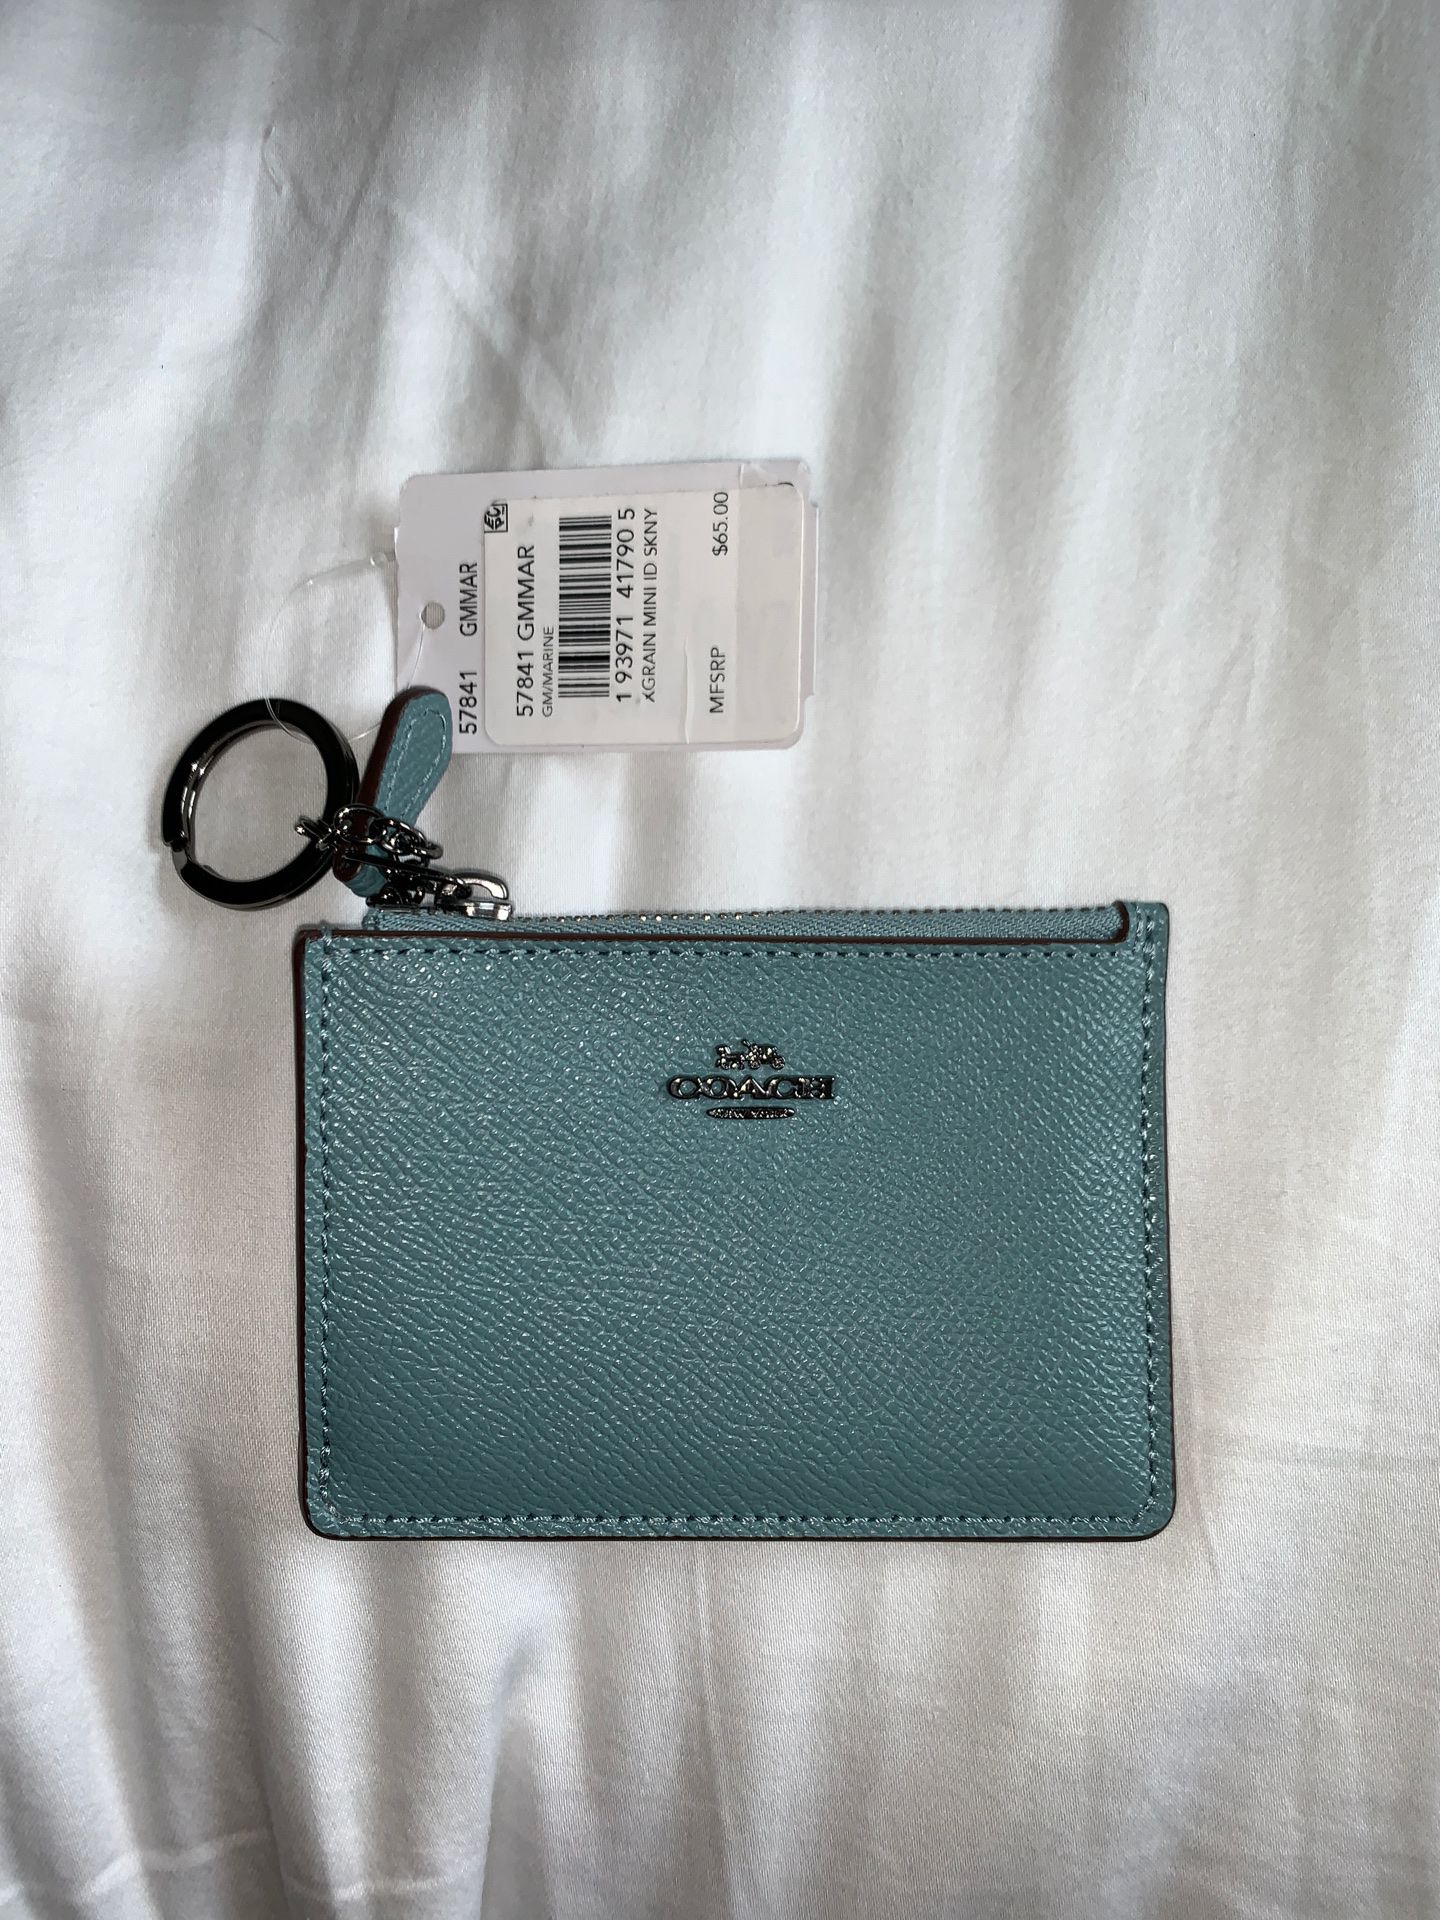 NEW Light blue Crossgrain COACH Leather Keychain Wallet